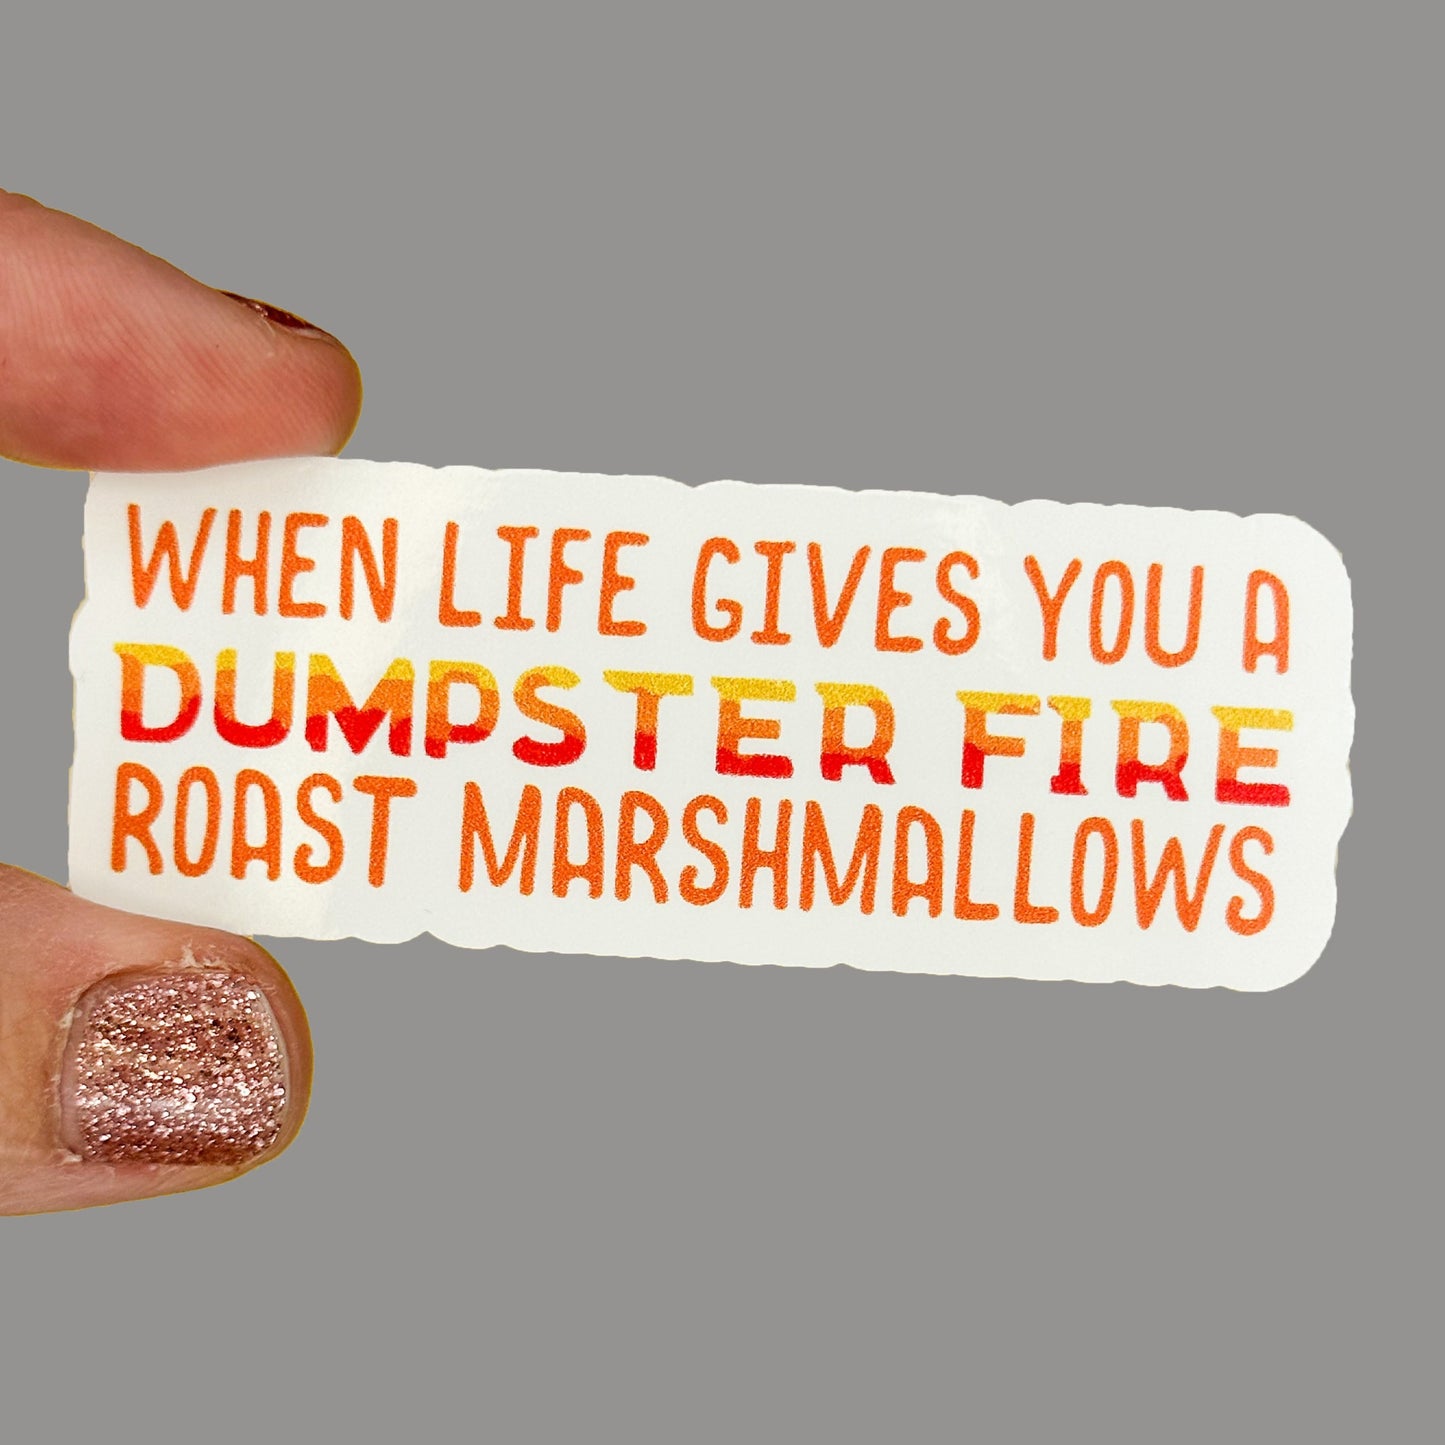 Hales Yeah Design Dumpster Fire Sticker ~3" at Longest Edge